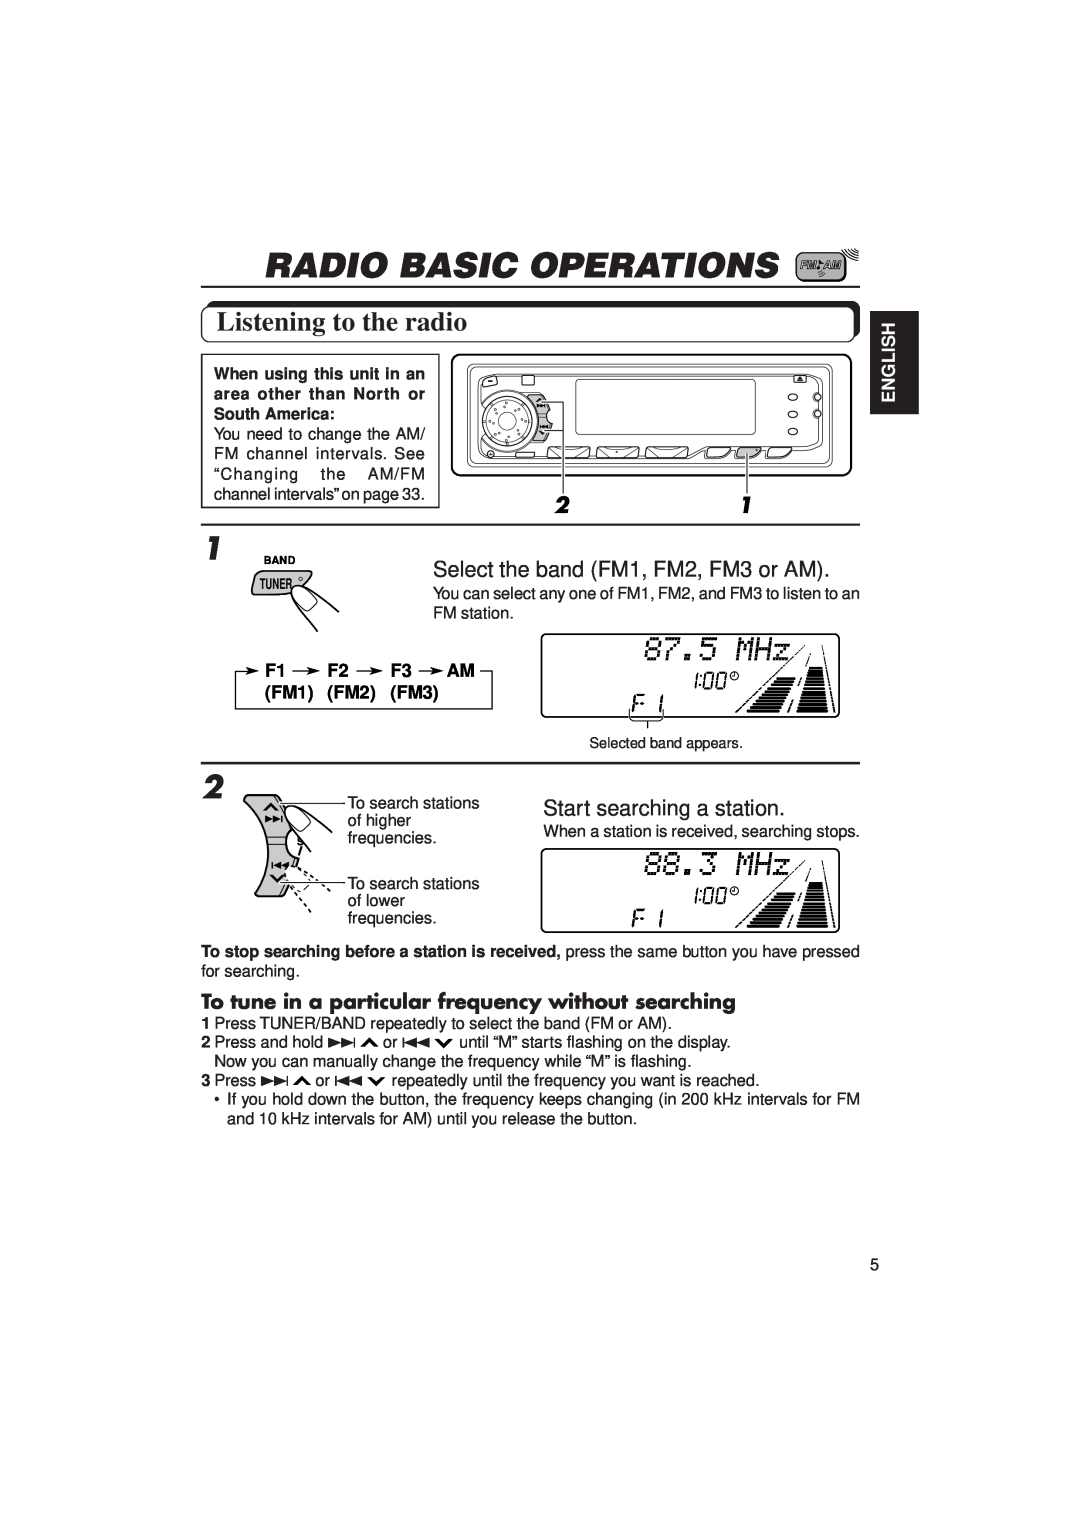 JVC KD-SX1000RJ manual Radio Basic Operations, Listening to the radio, Select the band FM1, FM2, FM3 or AM, English, F1 FM1 